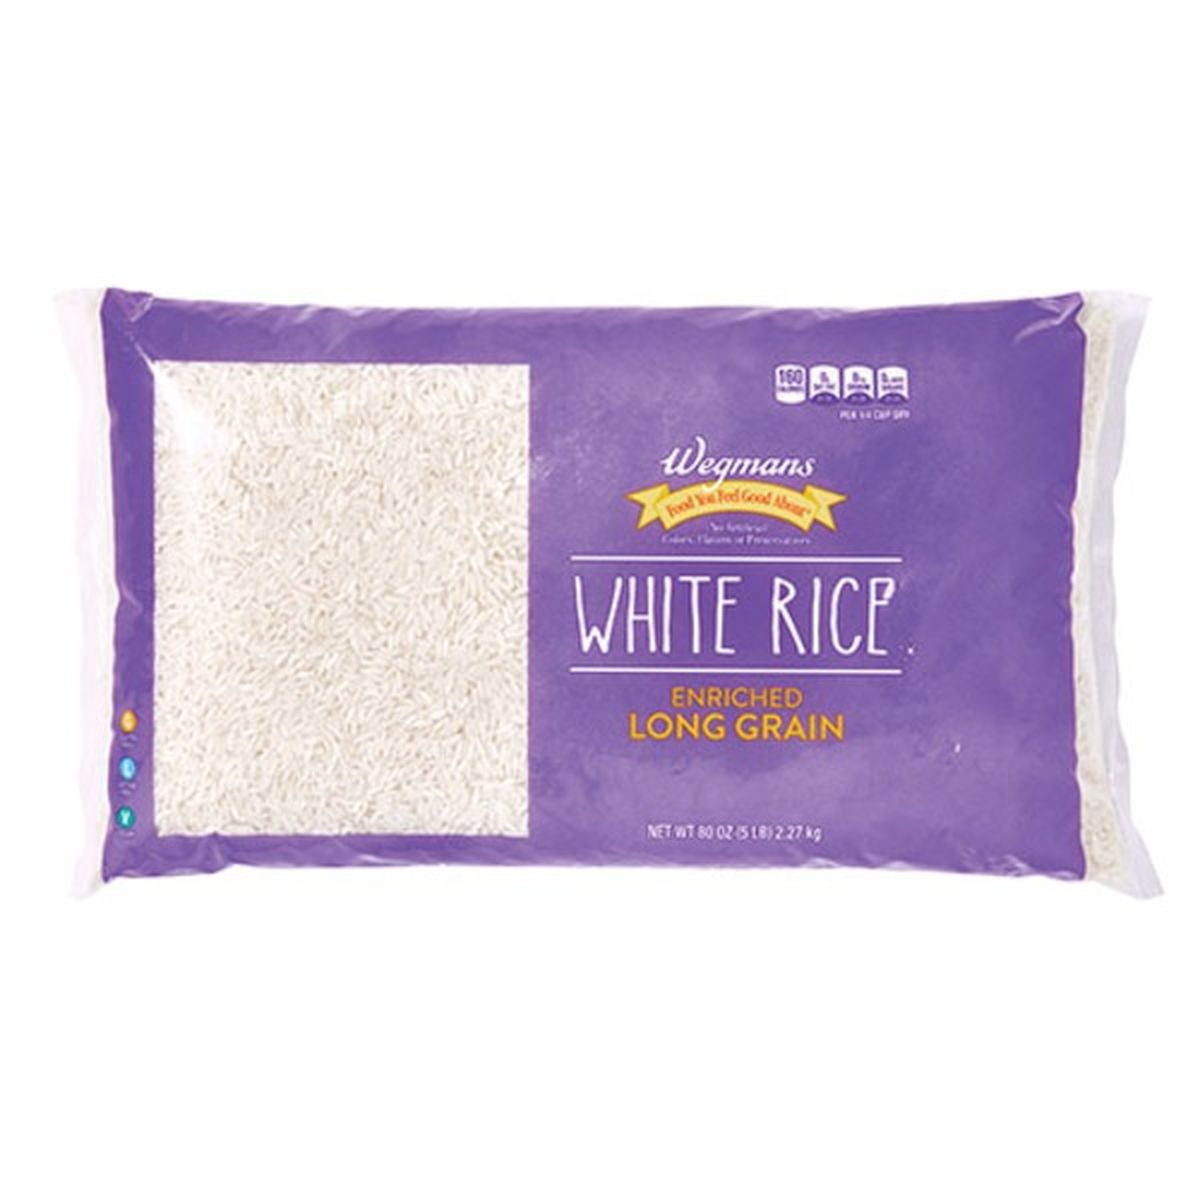 Calories in Wegmans Long Grain White Rice